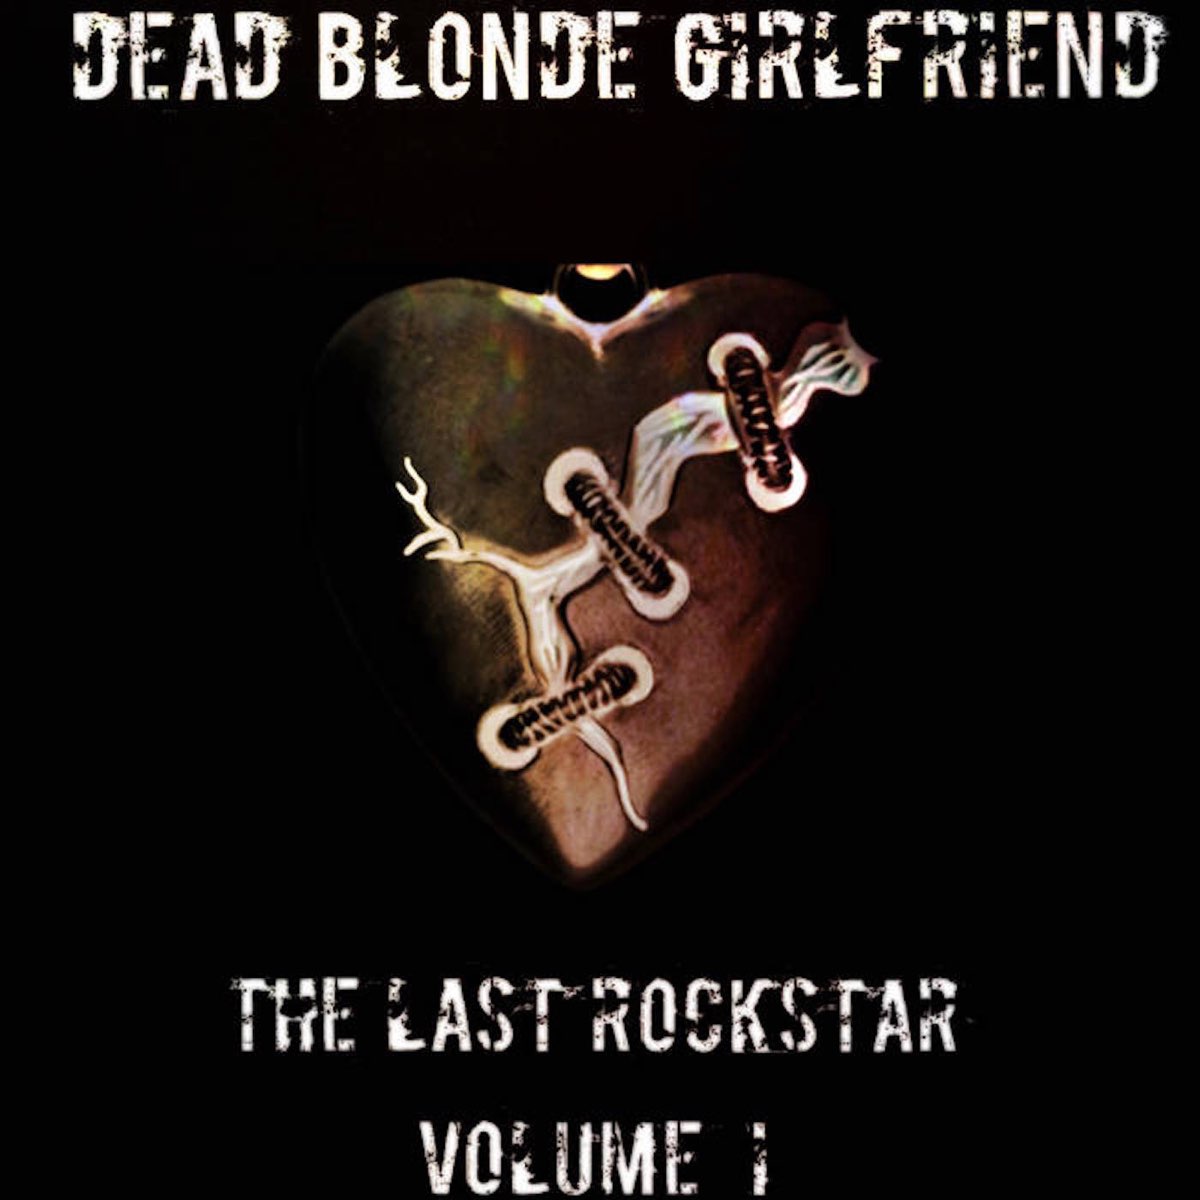 Dead blonde. Dead blonde песни. Dead blonde обложка альбома. Dead blonde лейбл.